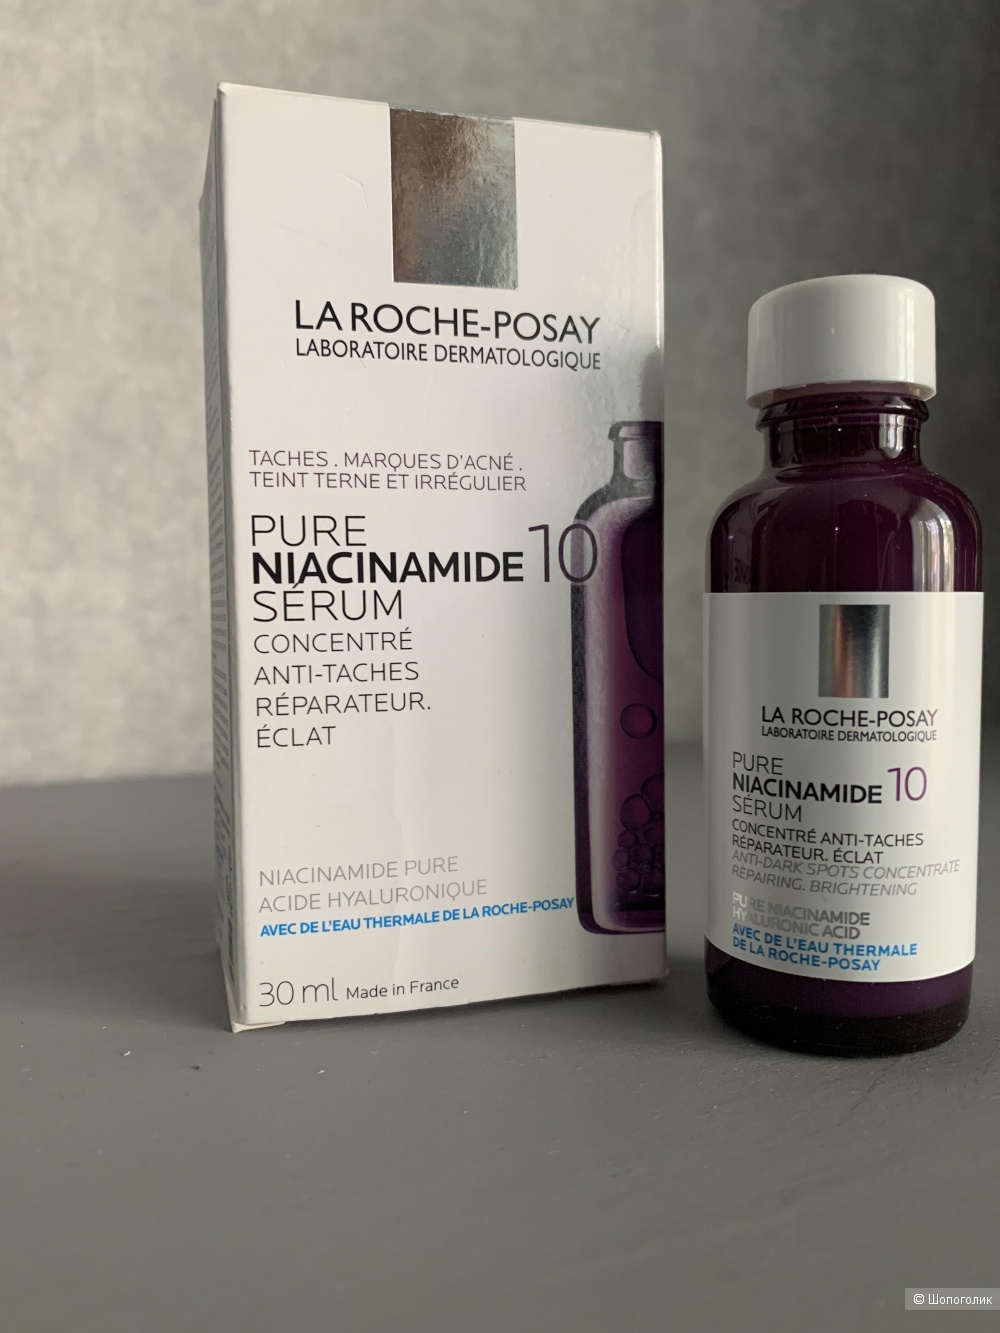 Сыворотка-концентрат для лица La Roche-posay Niacinamide 10, 30 ml